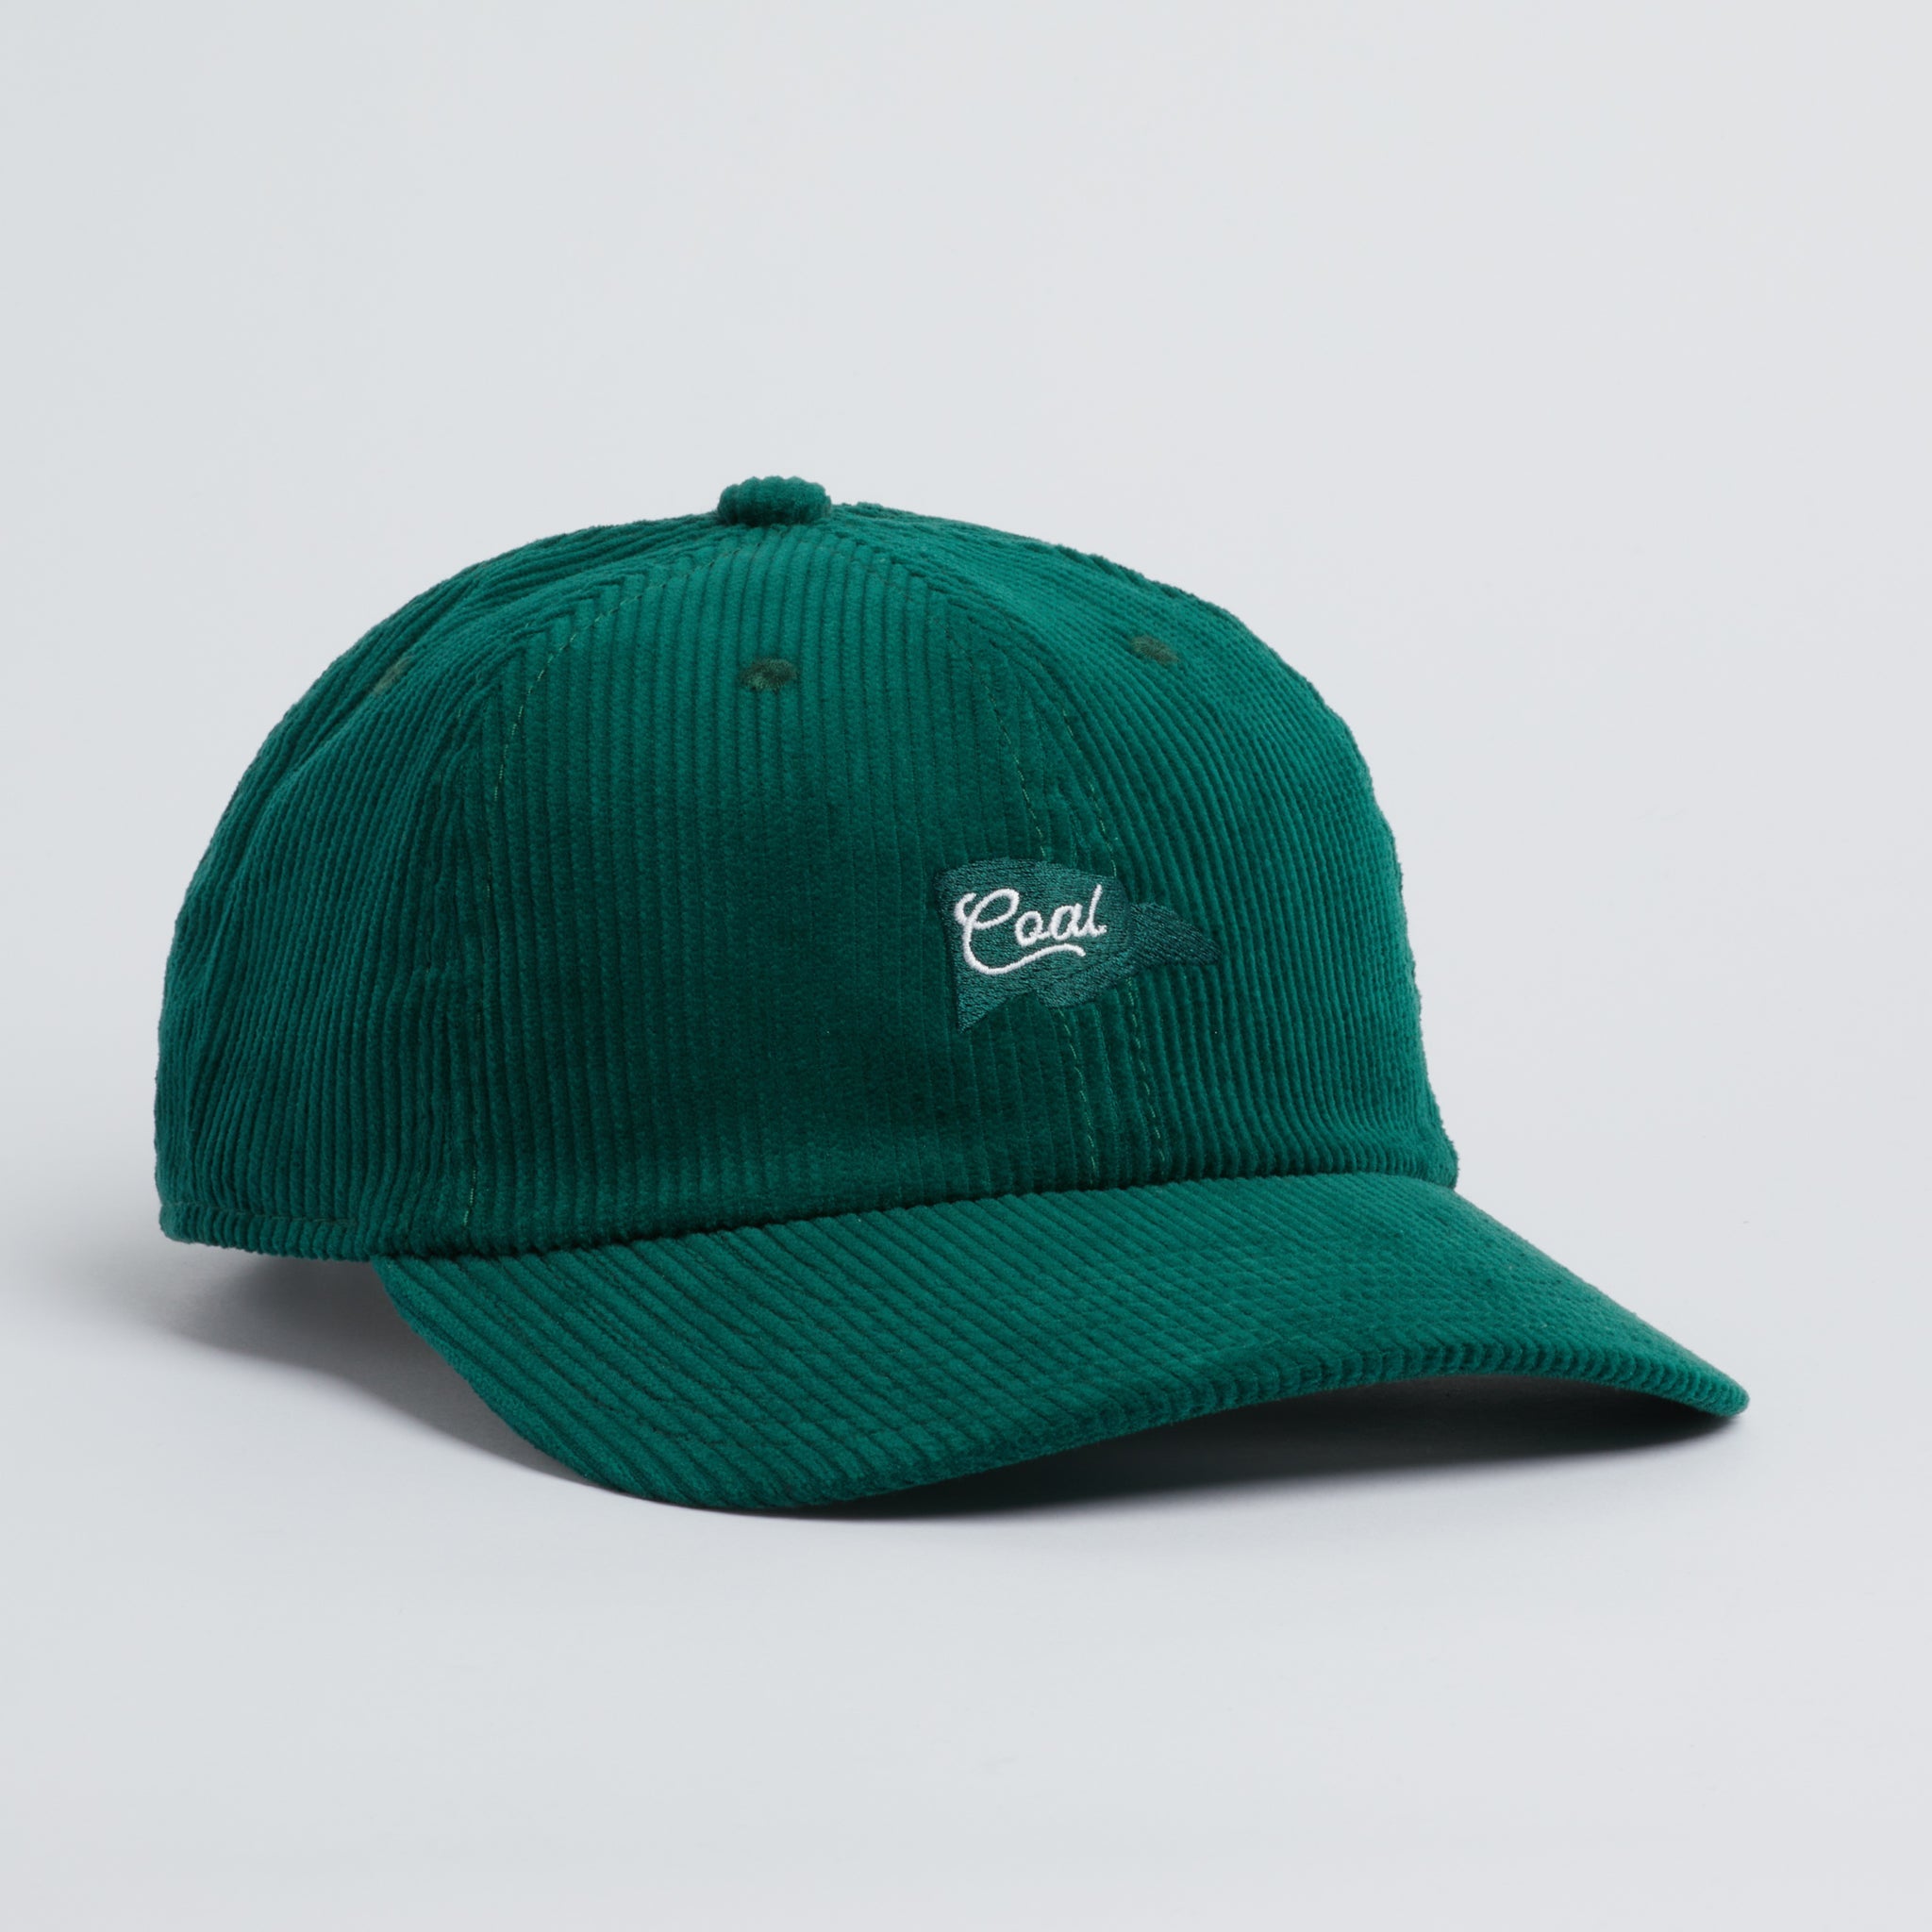 Dark Green Whidbey Coal Hat